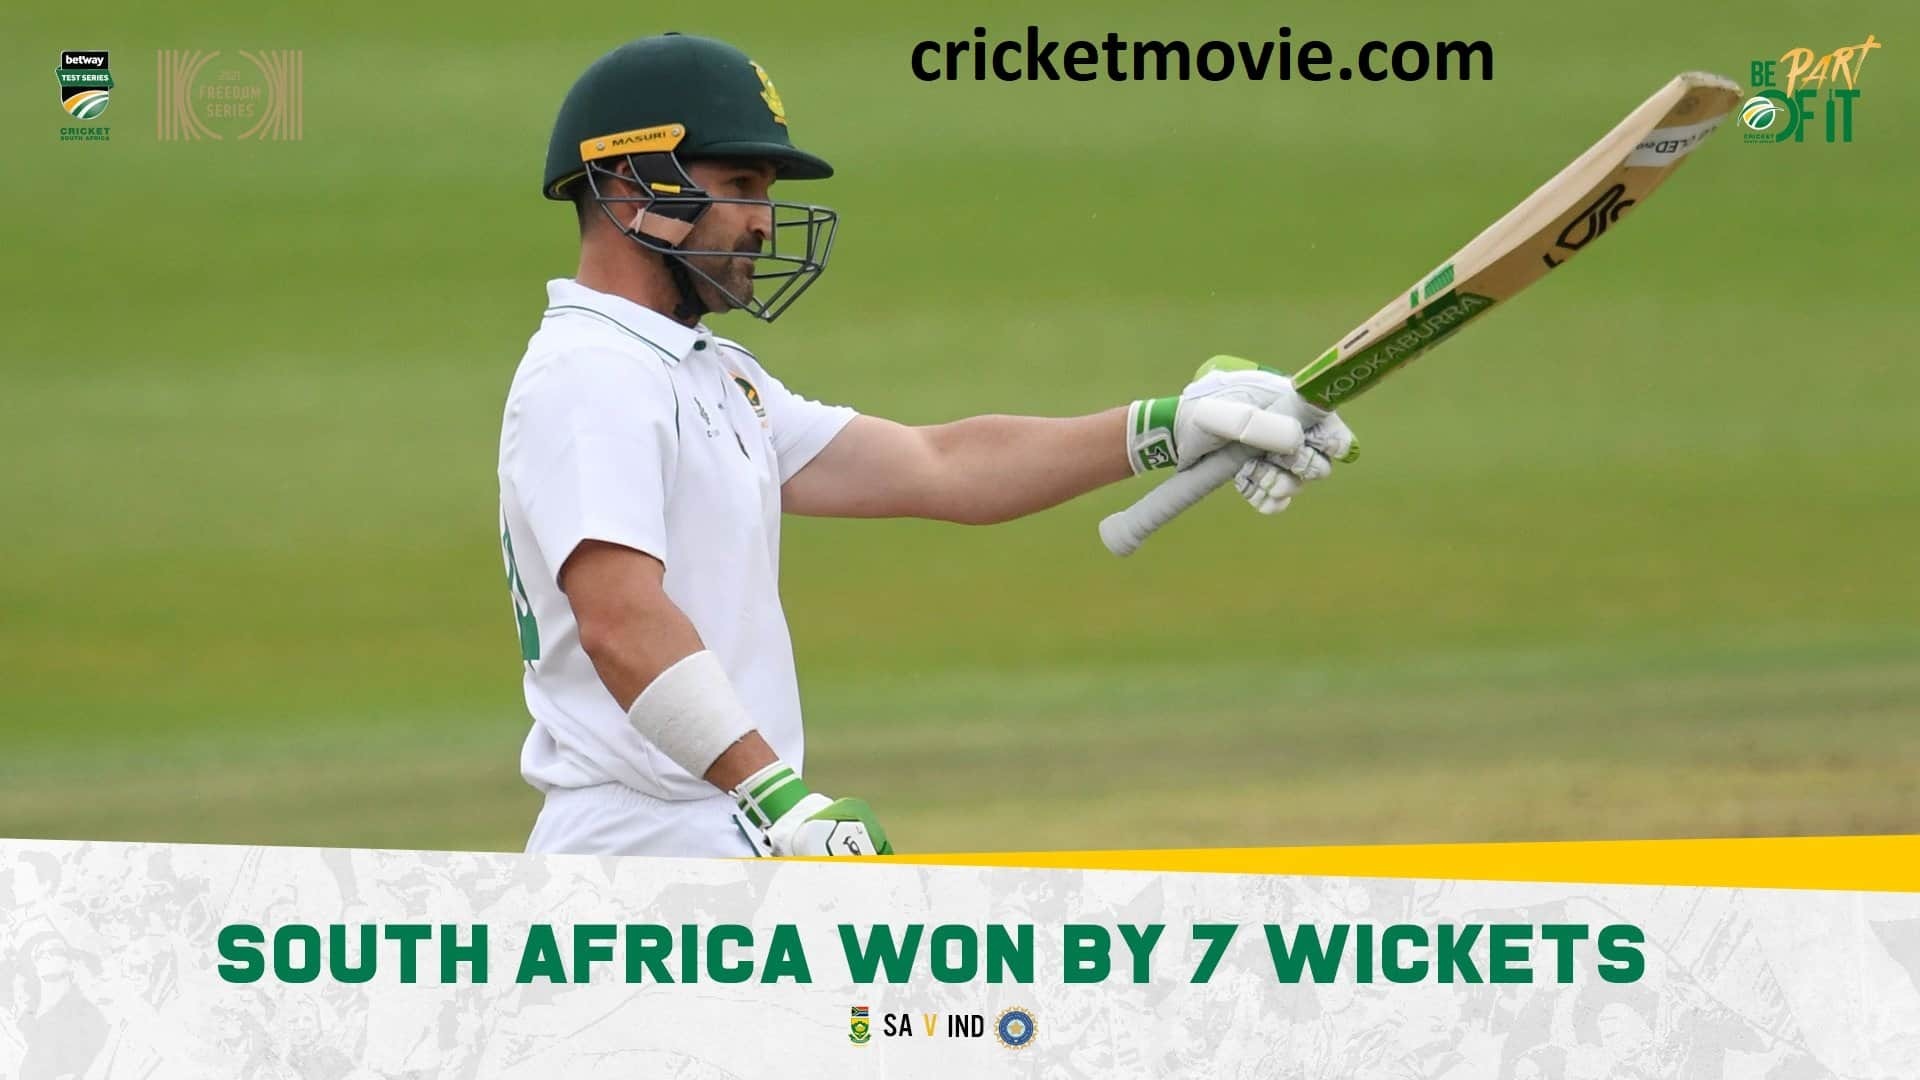 South Africa won Johannesburg Test-cricketmovie.com